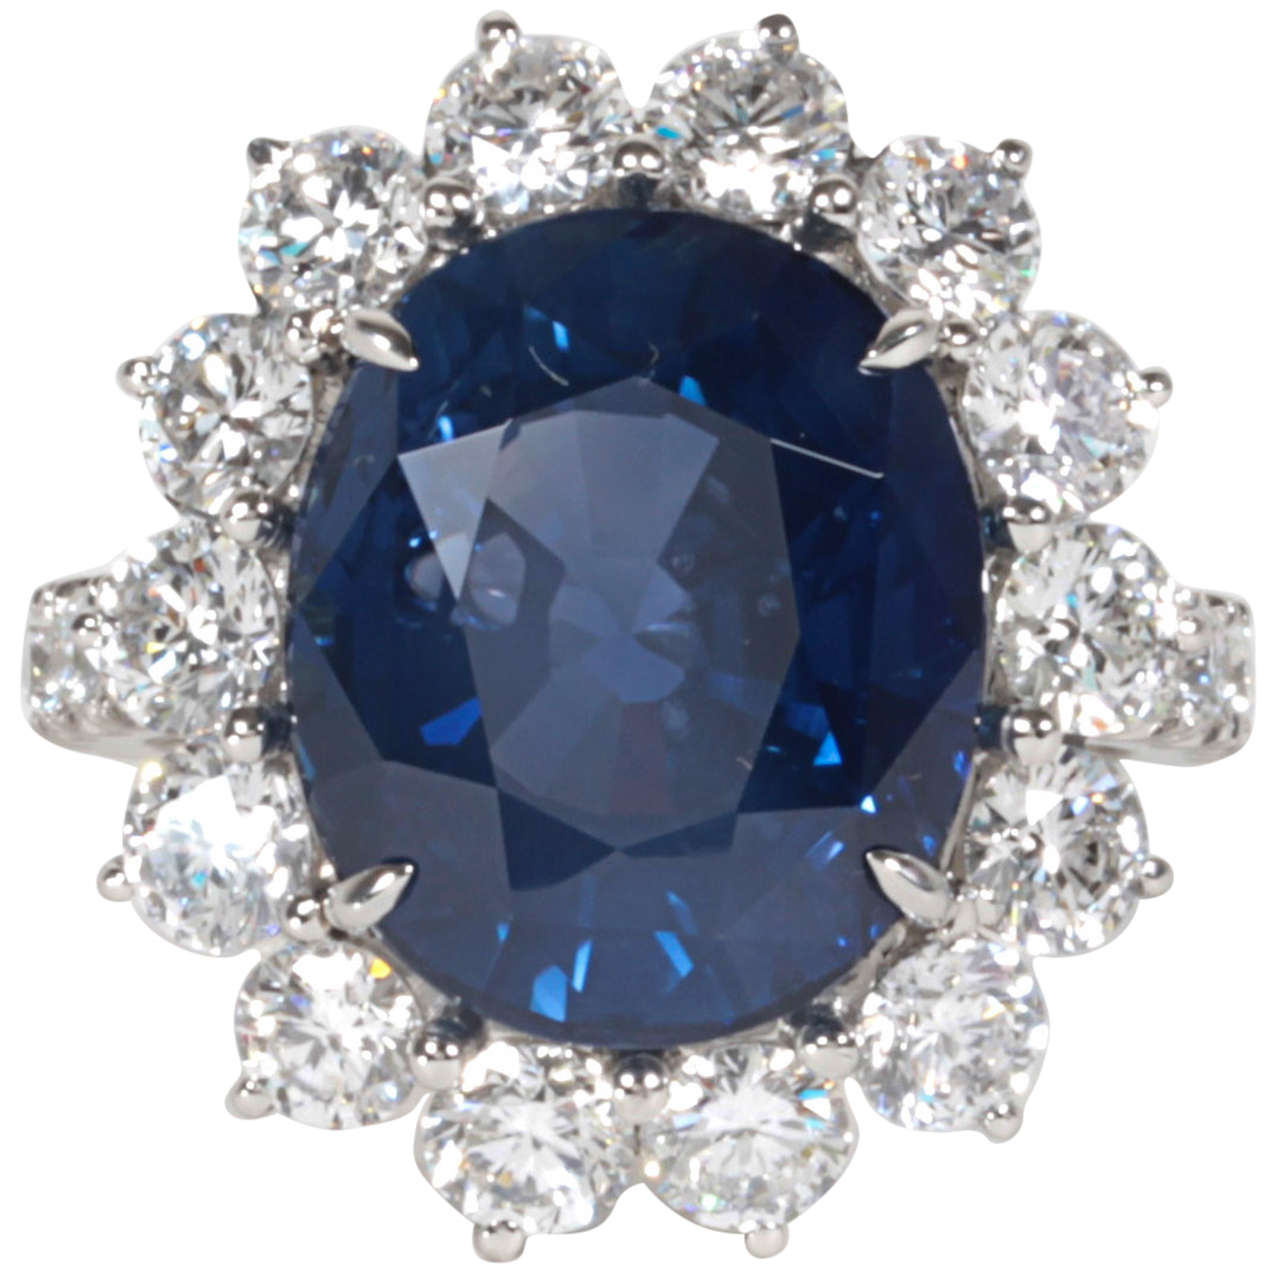 Elegant 11.73 Carat GIA Certified Sapphire Diamond Platinum Ring